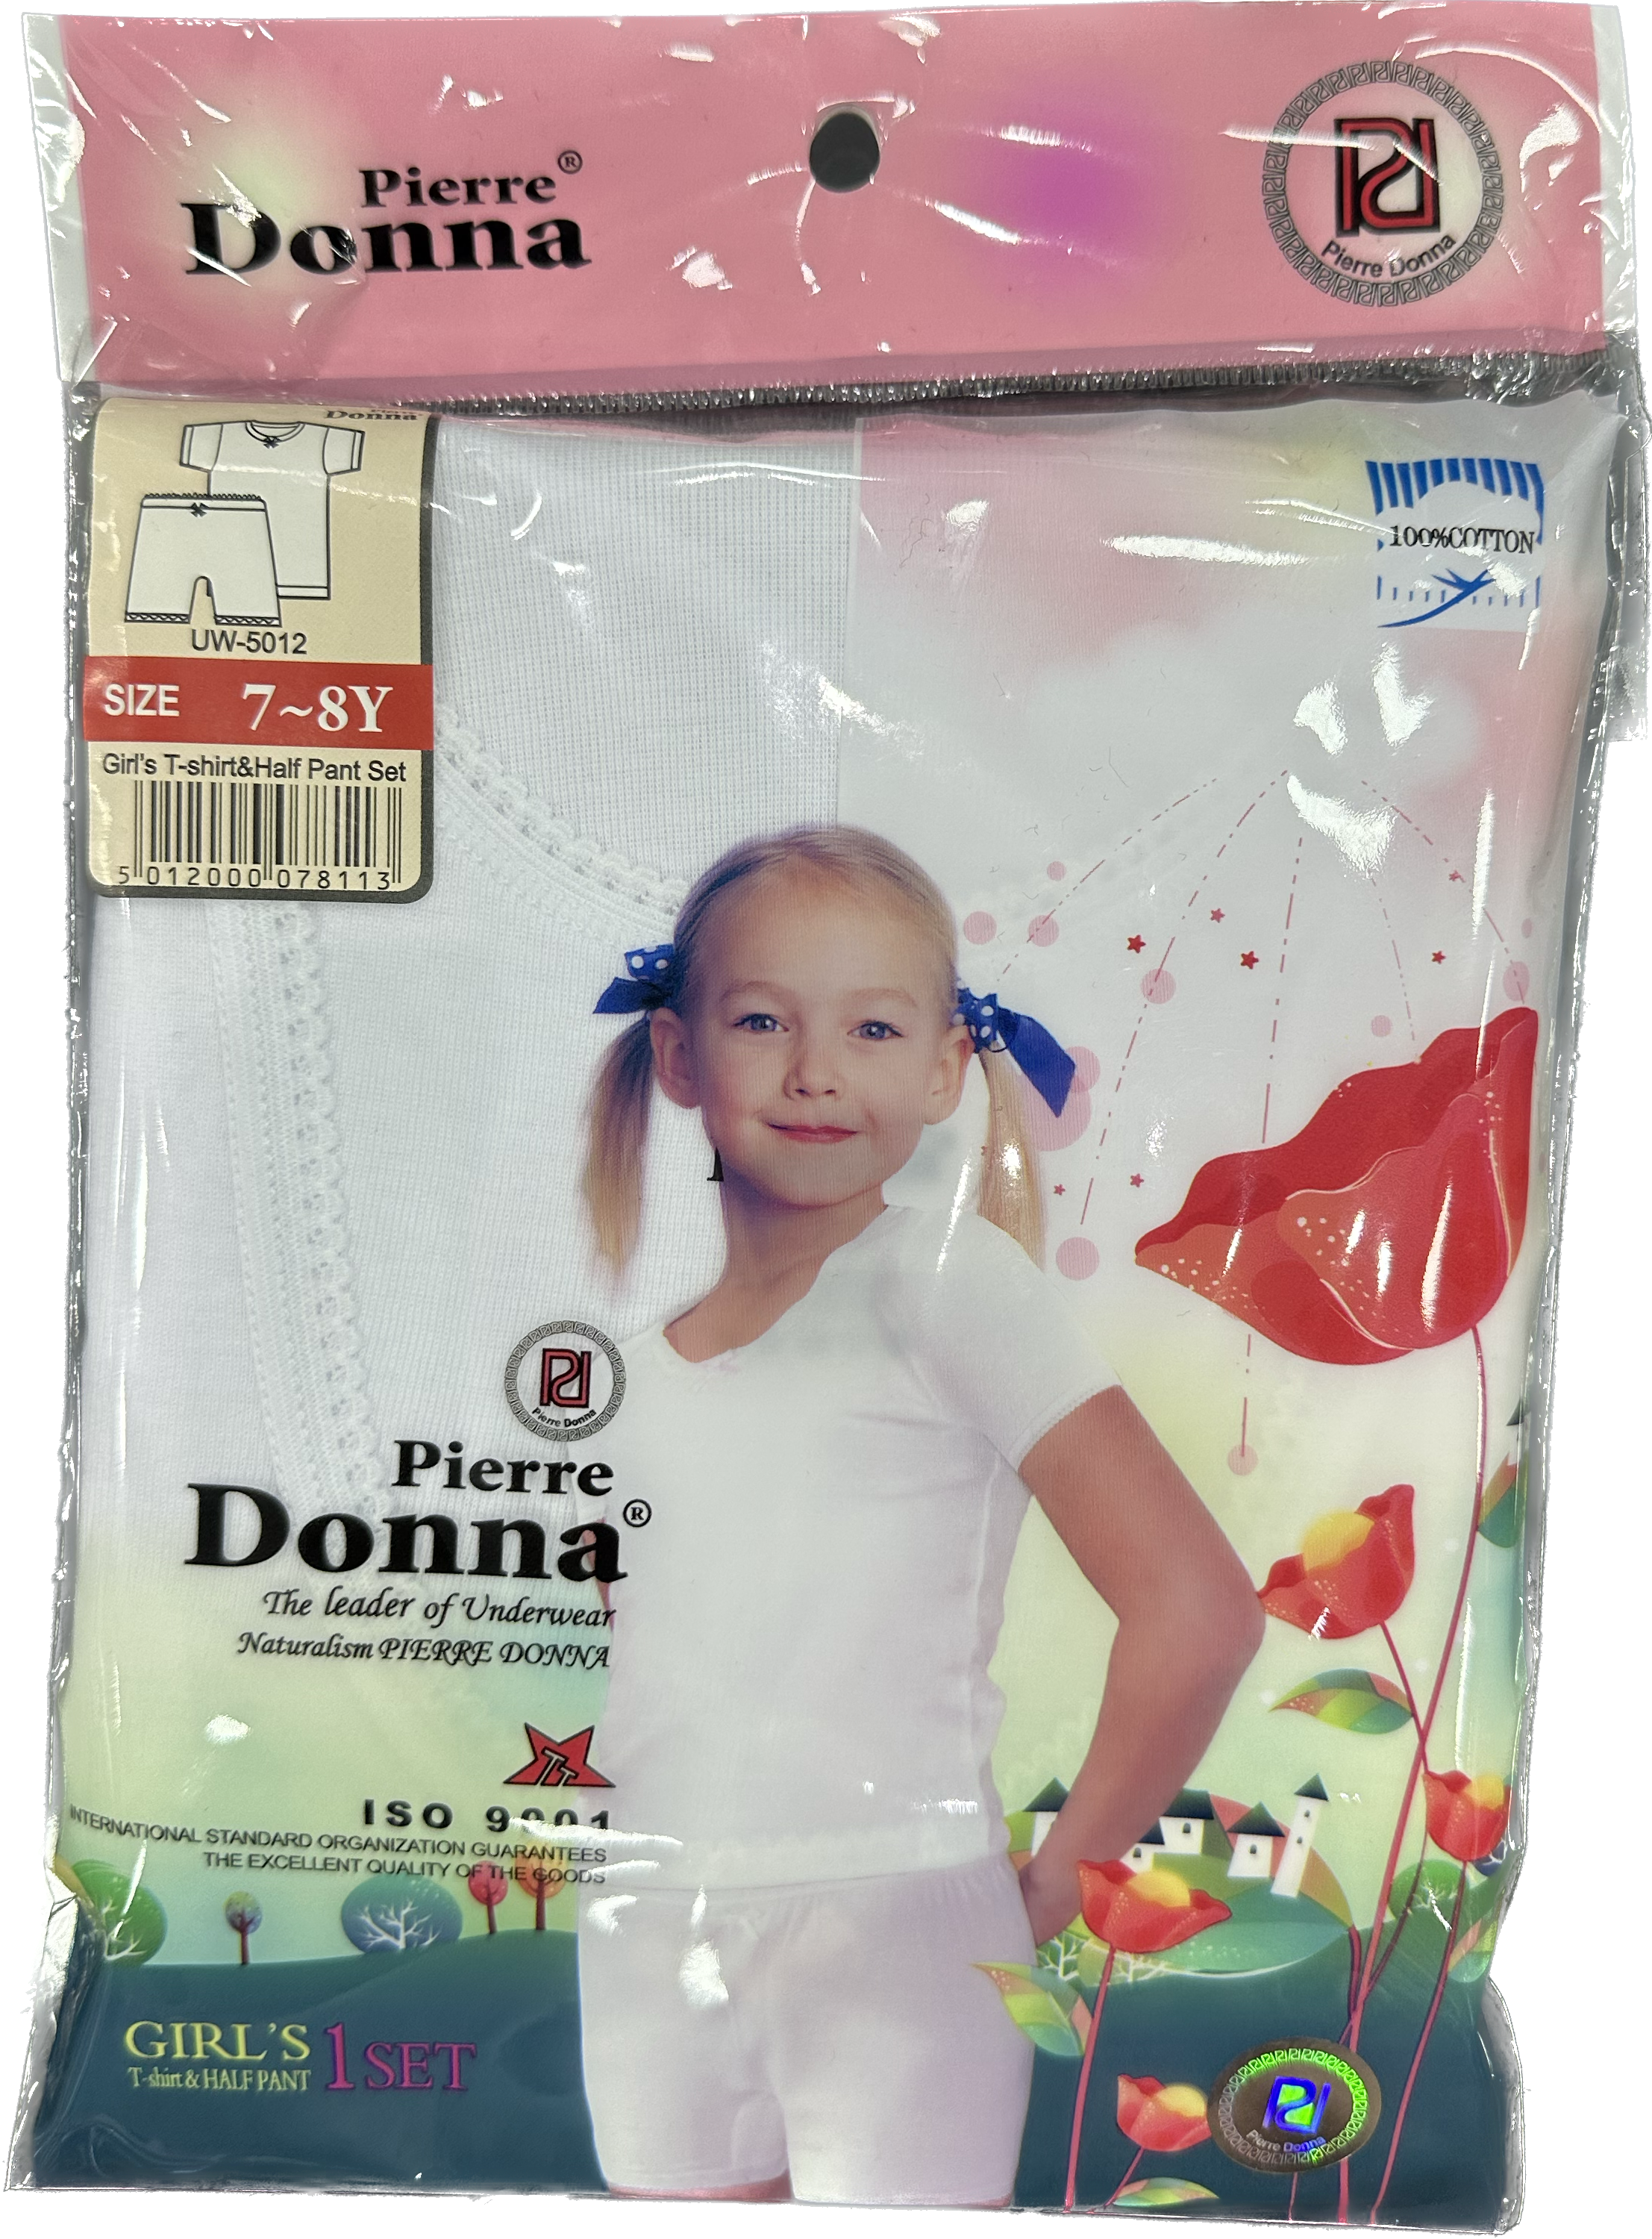 Pierre Donna Girls T-shirt and half pant set- Underwear set white wholesale 12 pcs - carton